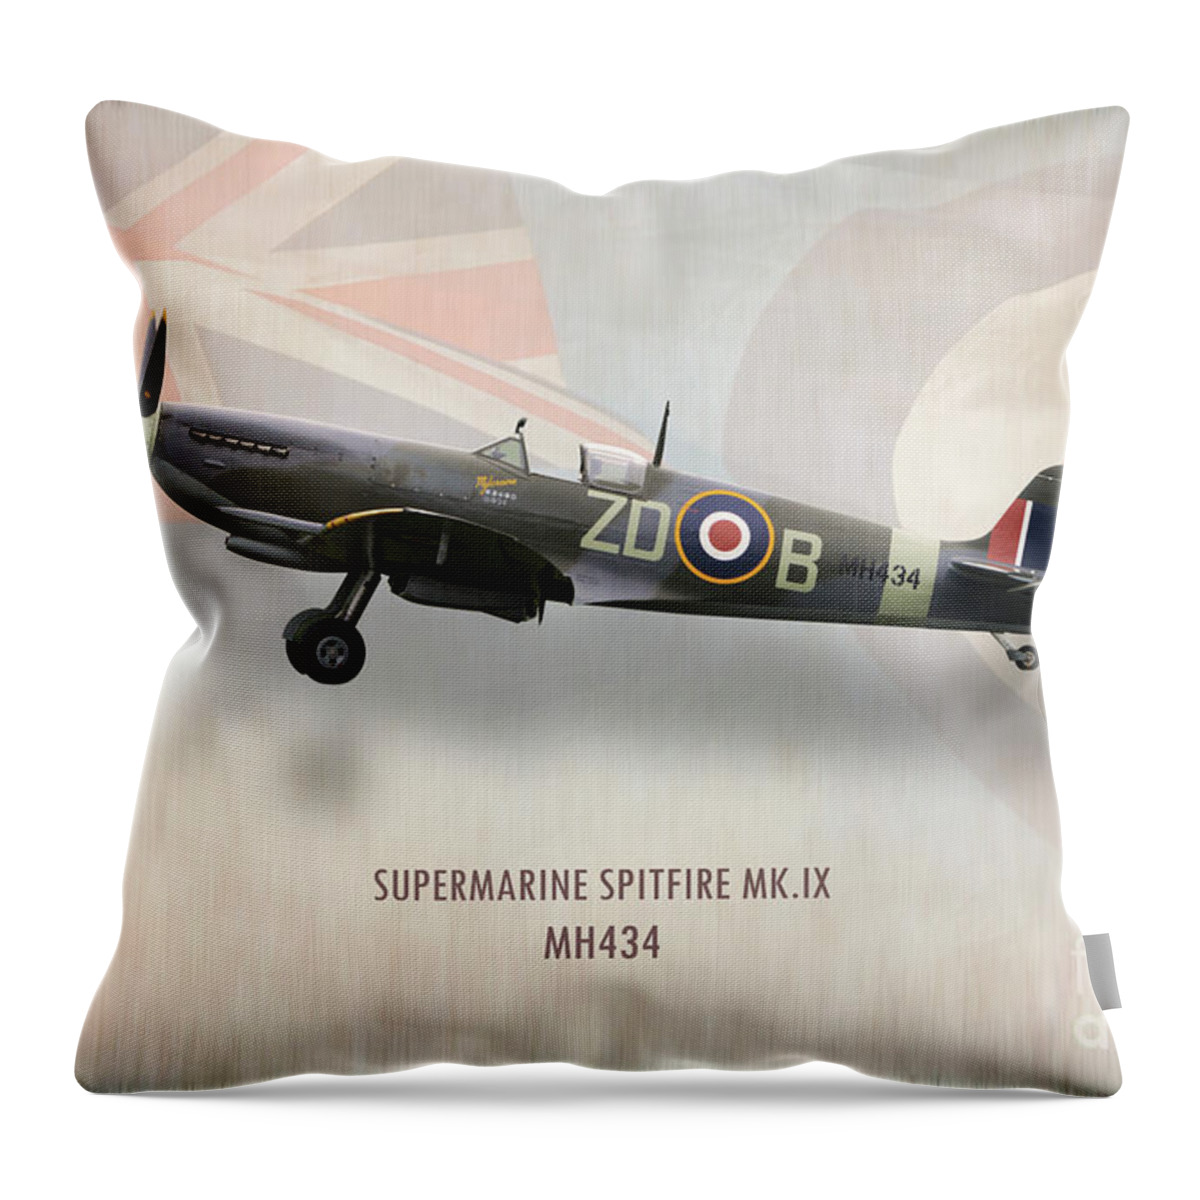 Supermarine Throw Pillow featuring the digital art Supermarine Spitfire Mk.IX MH434 by Airpower Art